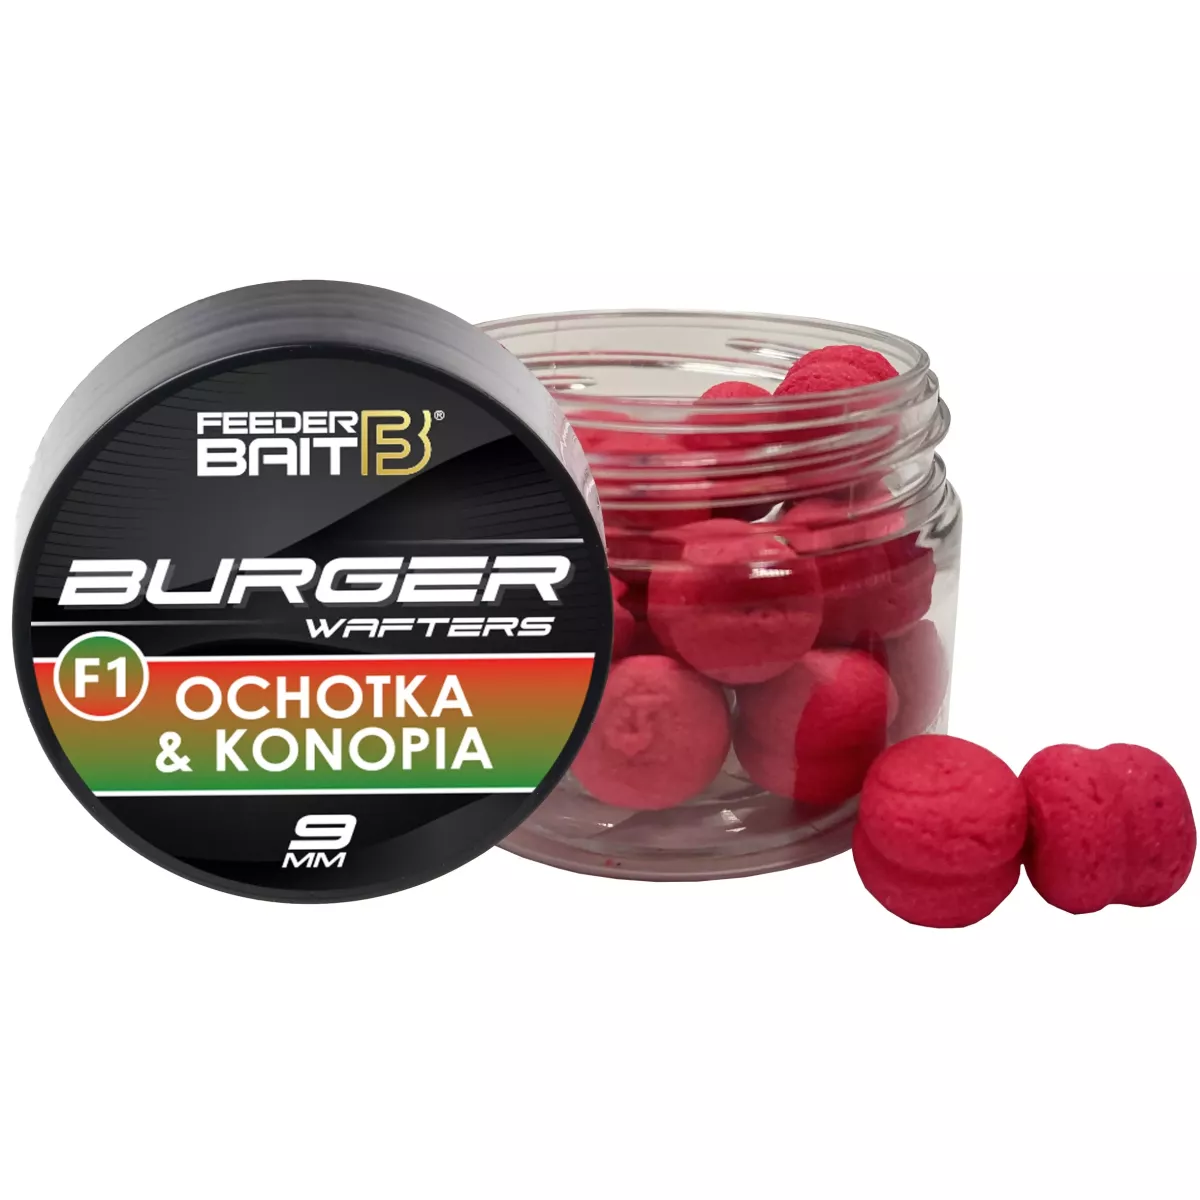 FB37-2 Feeder Bait Burger Wafters 9mm - F1 Ochotka & Konopia